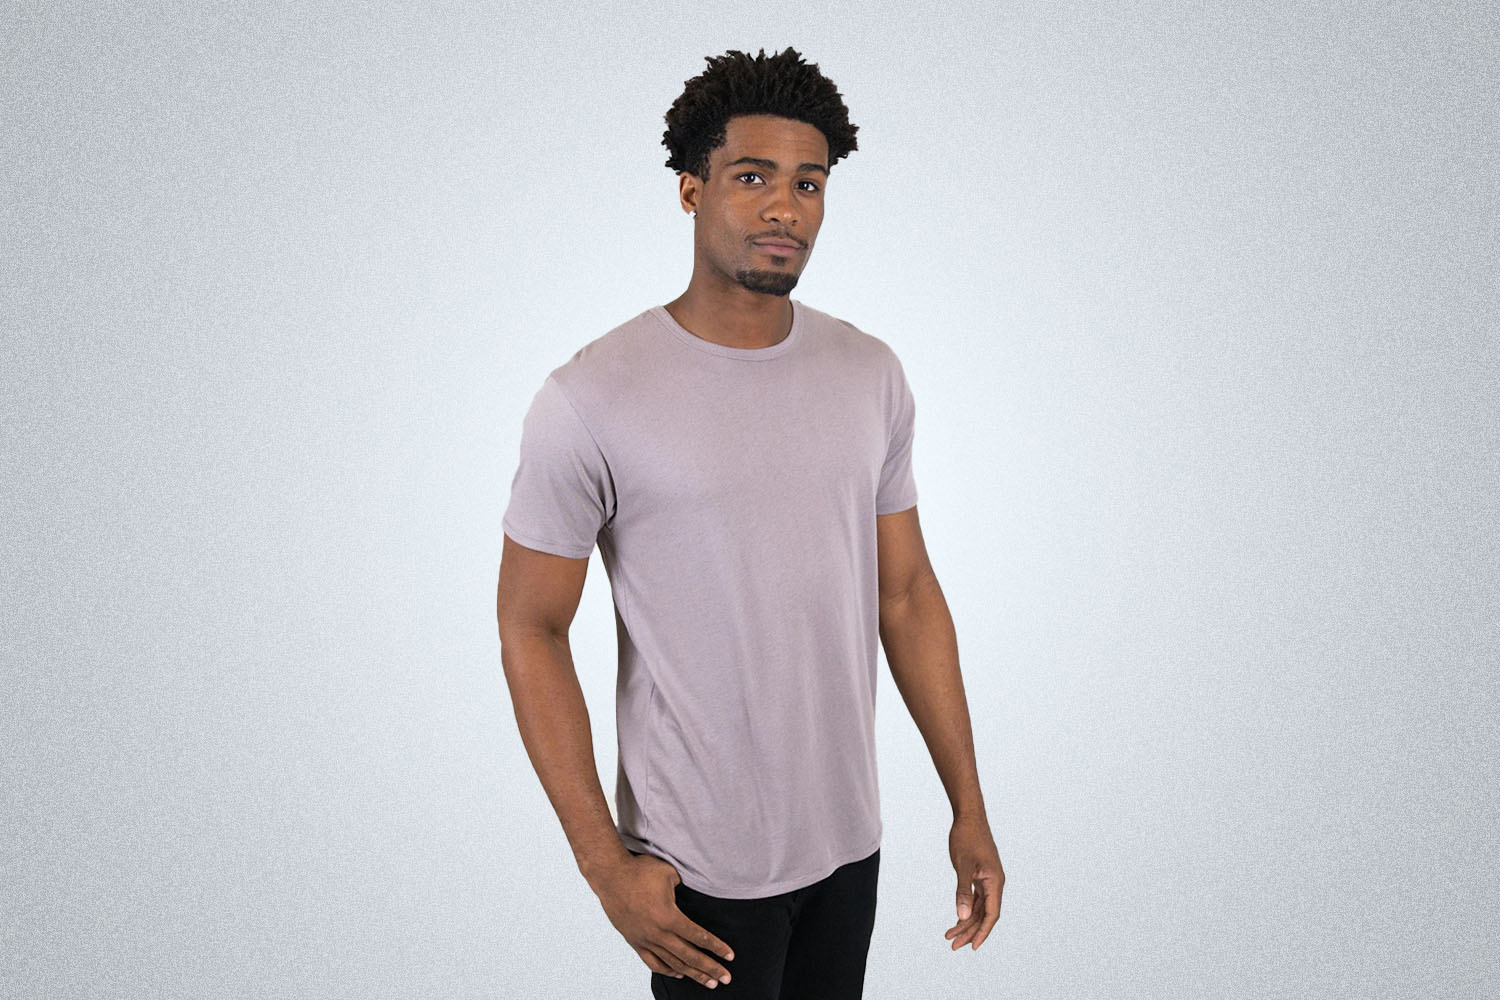 a model in a lavendar Clean Fresh Tee shirt on a grey background